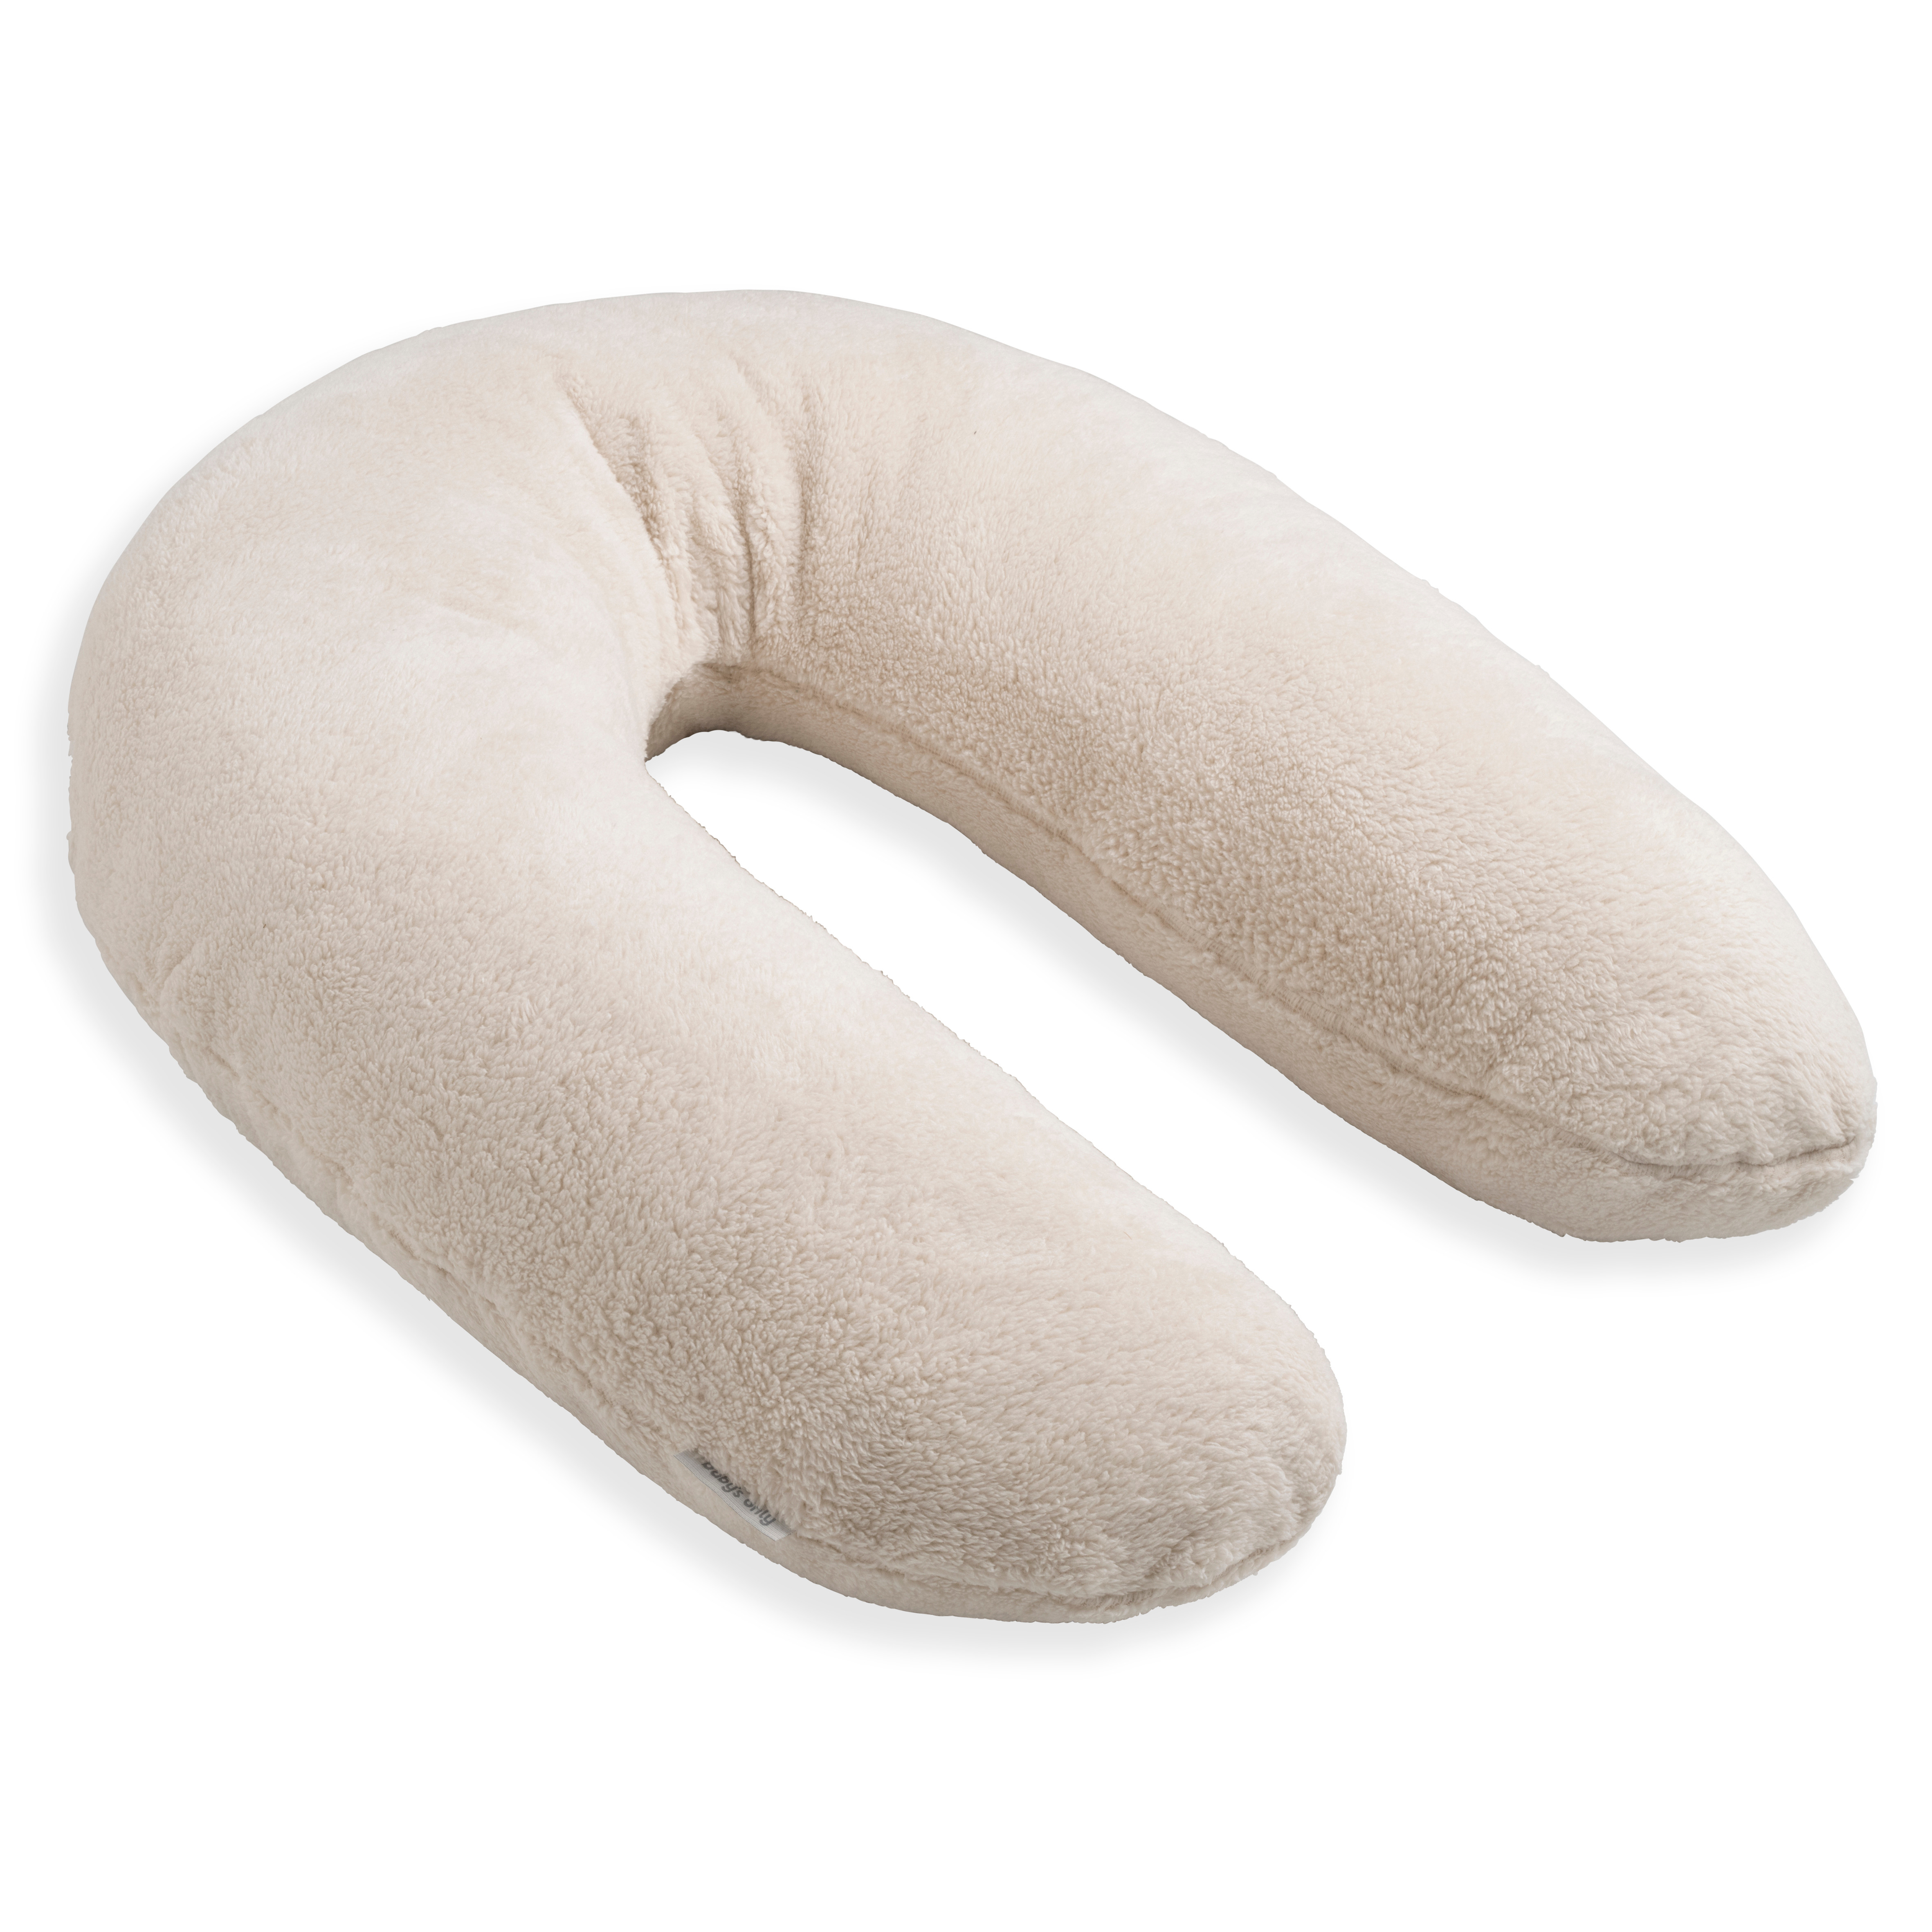 Nursing pillow Cozy warm linen